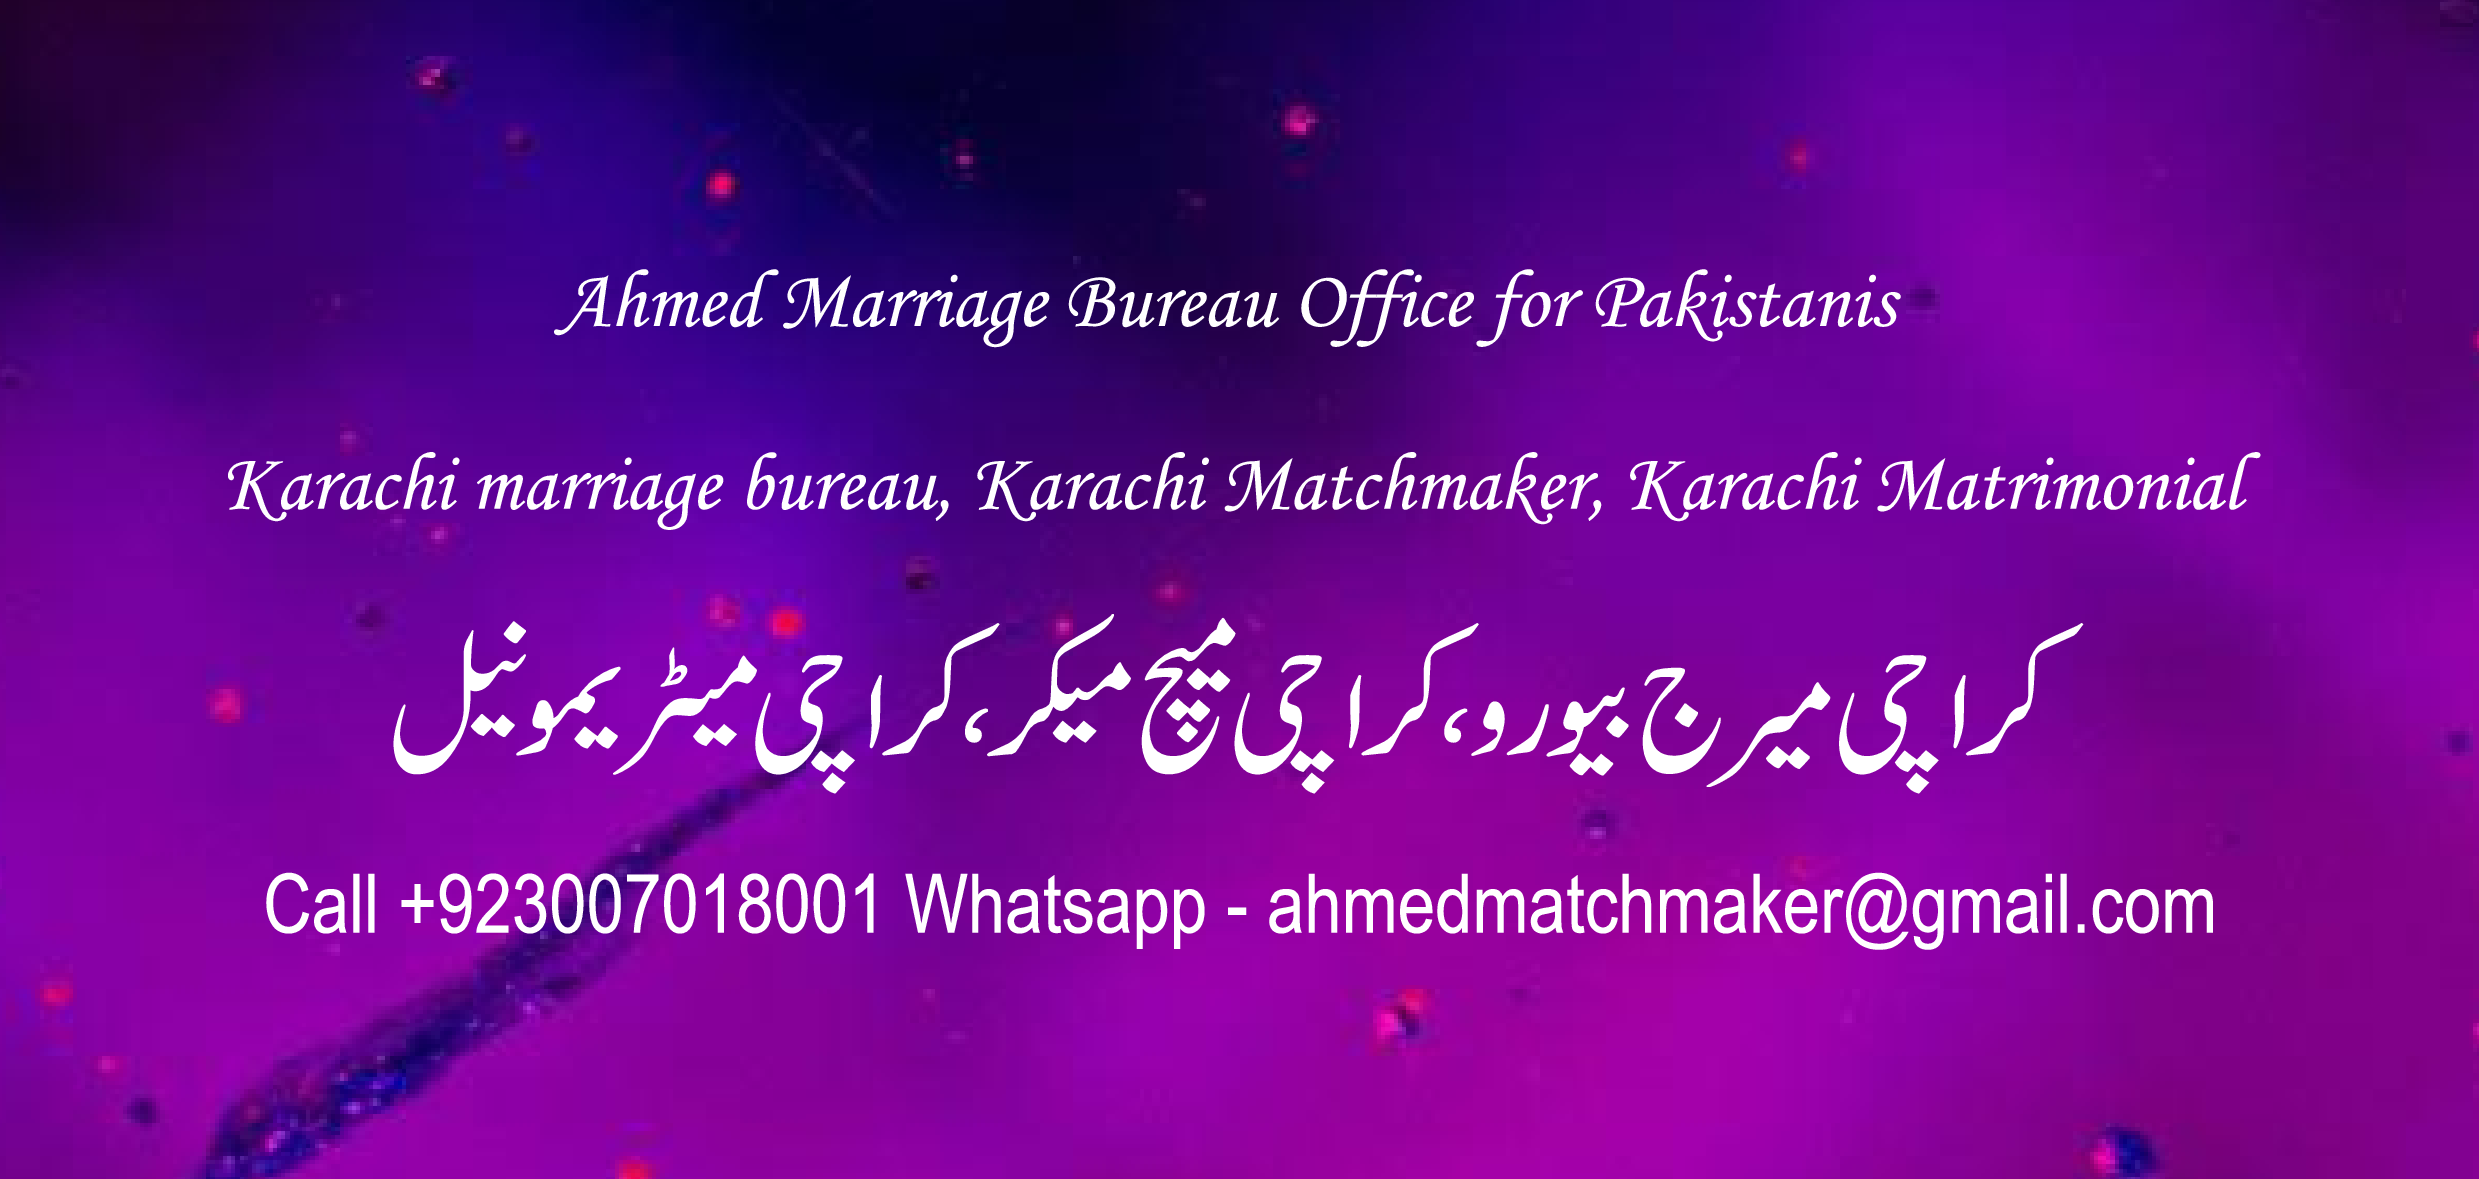 Pakistan-marriage-bureau-shaadi-matrimonial-America-Canada-Australia-Dubai-Europe-31.png